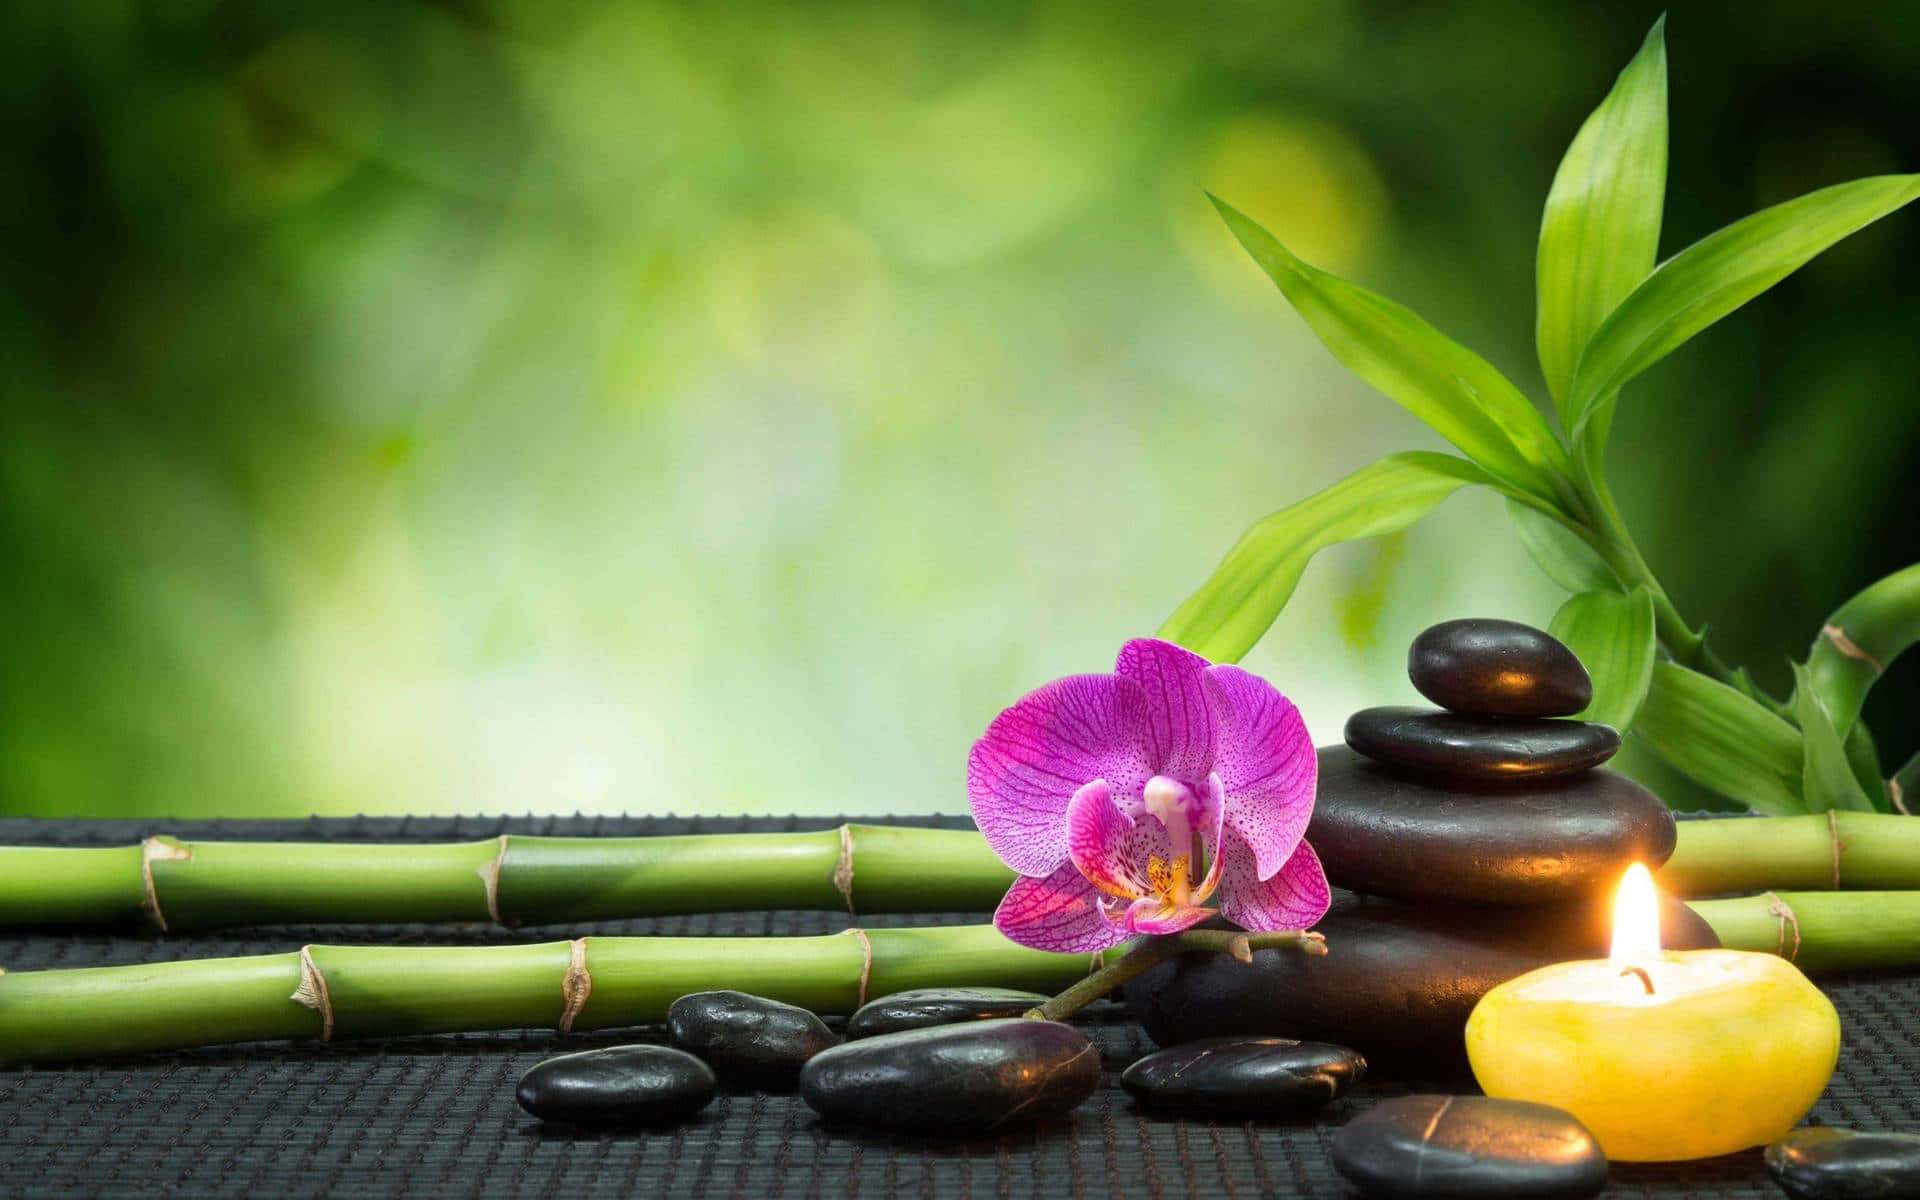 Find your inner balance in a mindful Zen garden